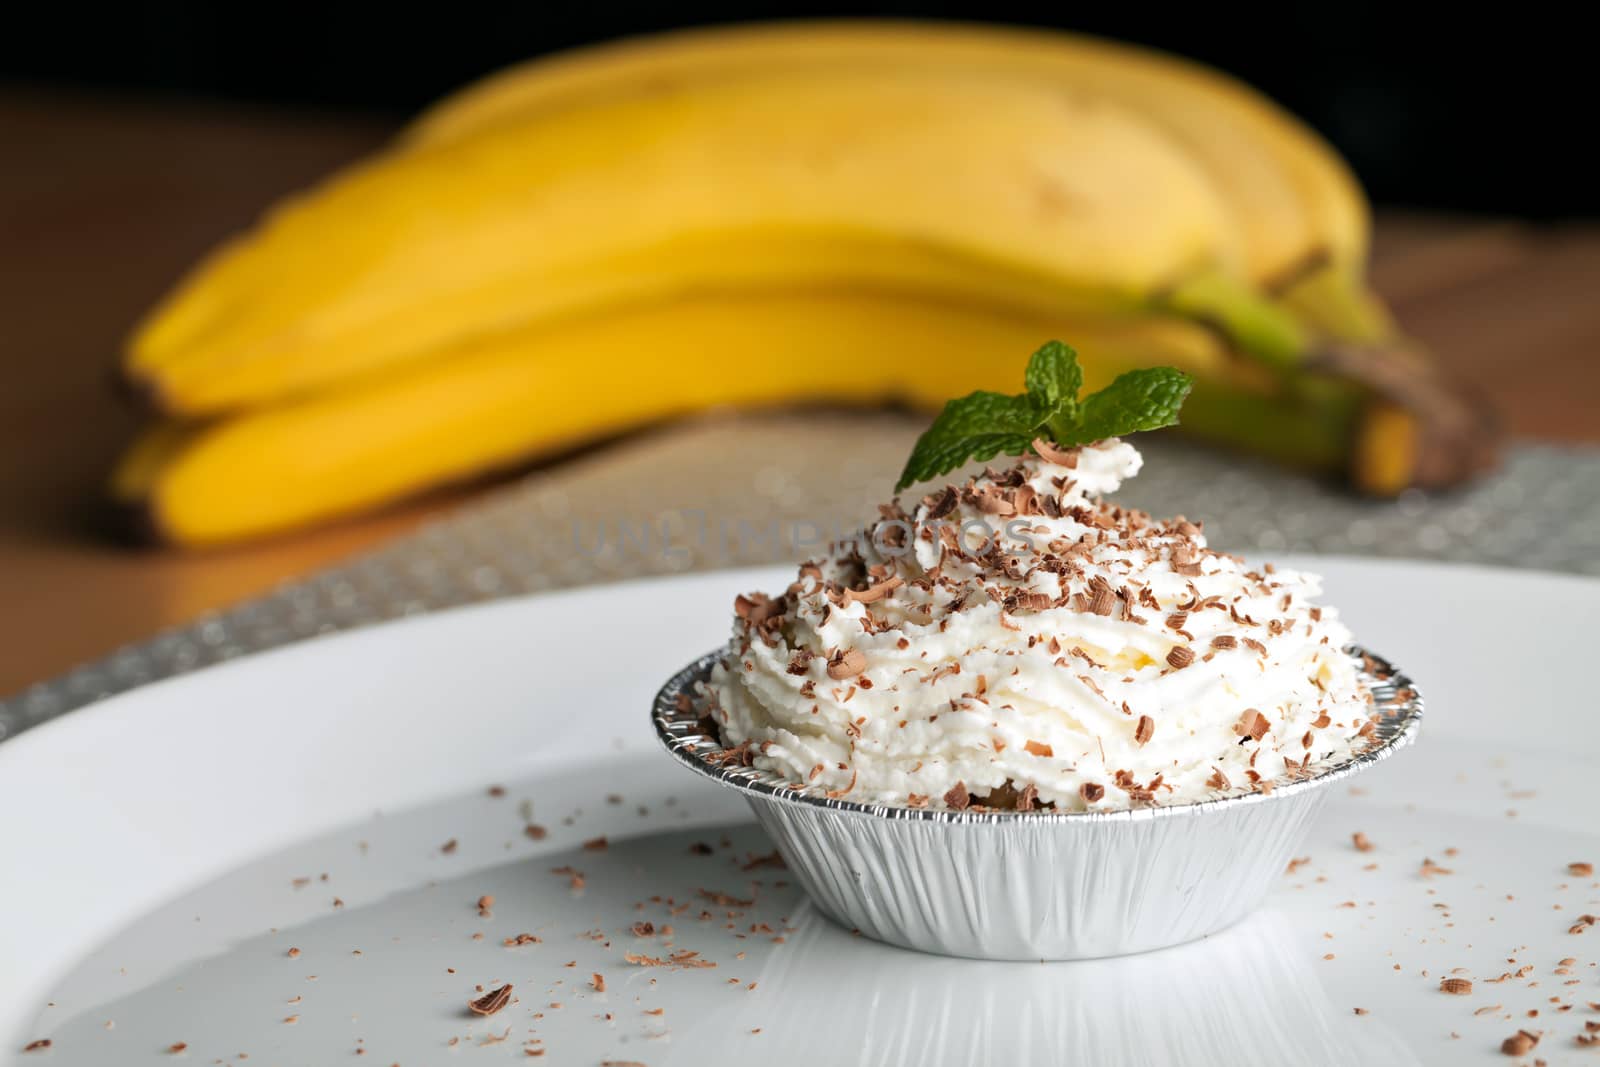 Banana cream dessert with fresh whipped cream and chocolate shavings. Shallow depth of field.